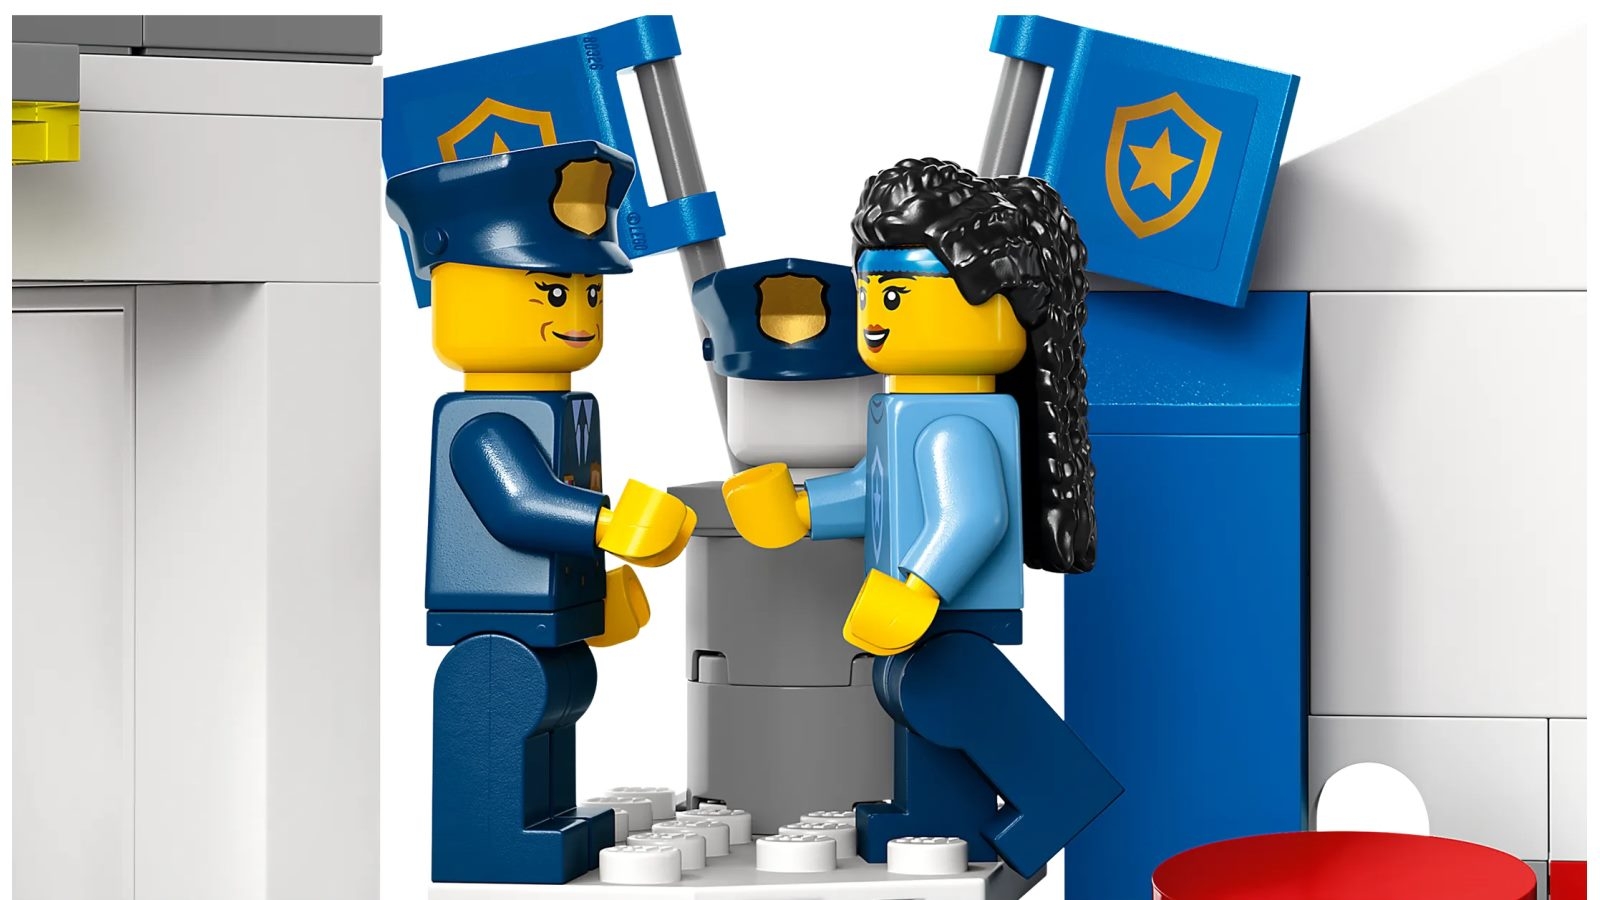 Lego 60372 - Police Training Academy - Hub Hobby